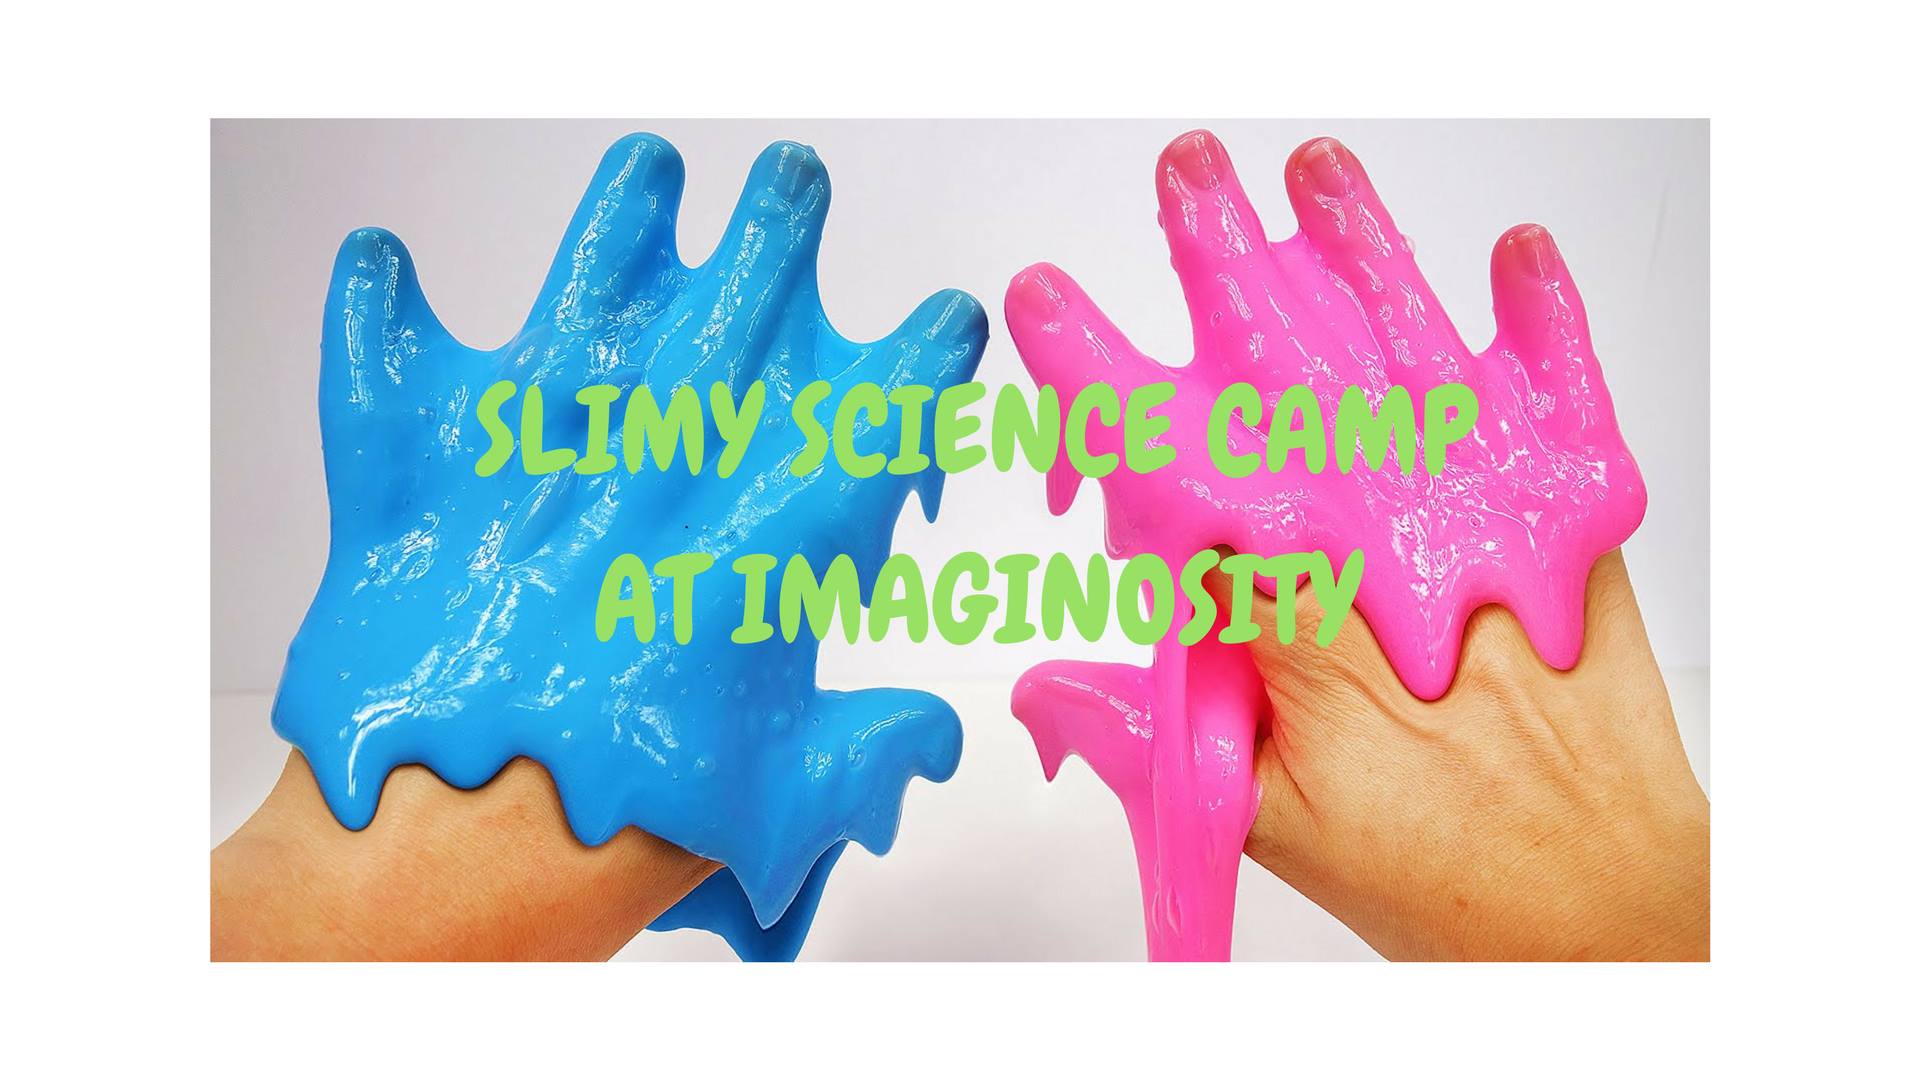 Slimy science camp imaginosity